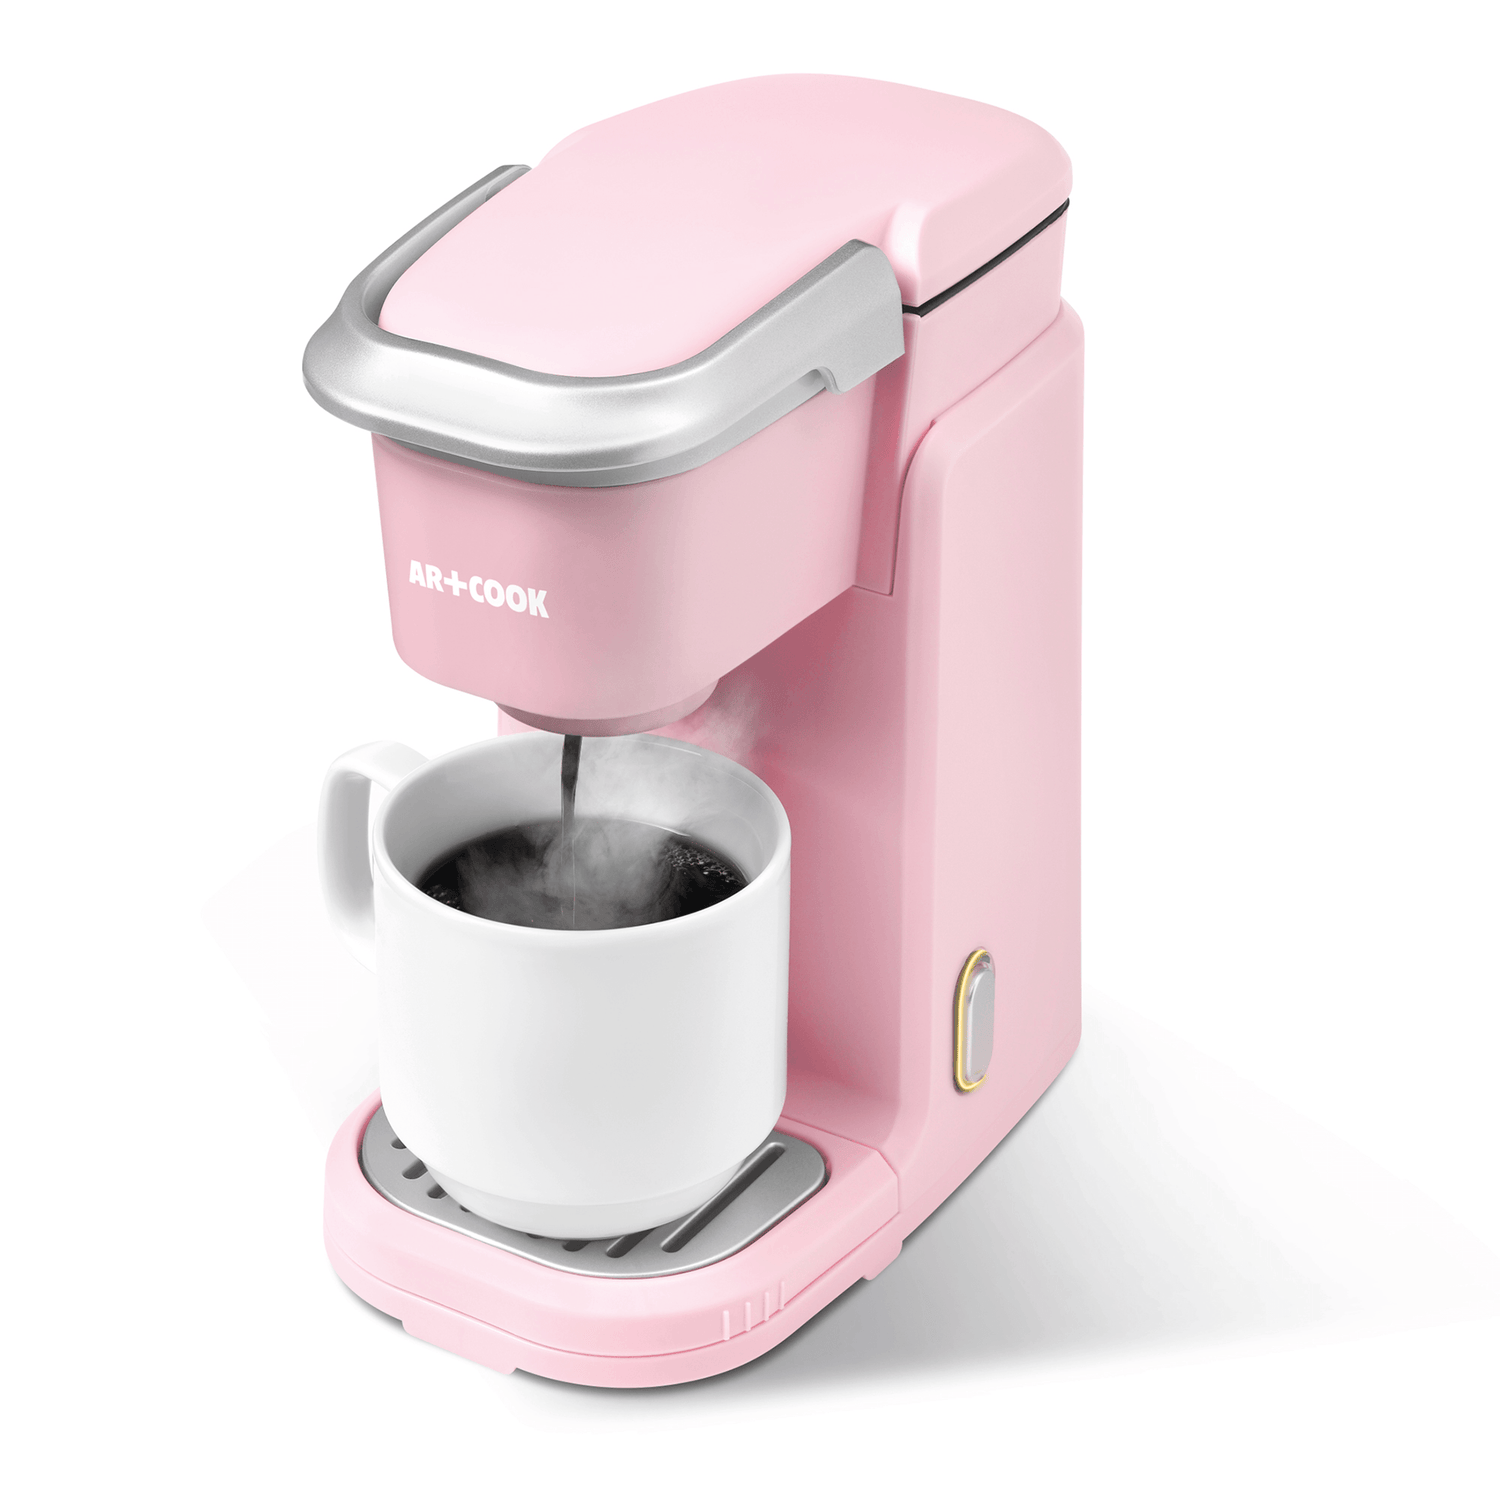 Art & Cook Single Serve Coffee Maker - Pink